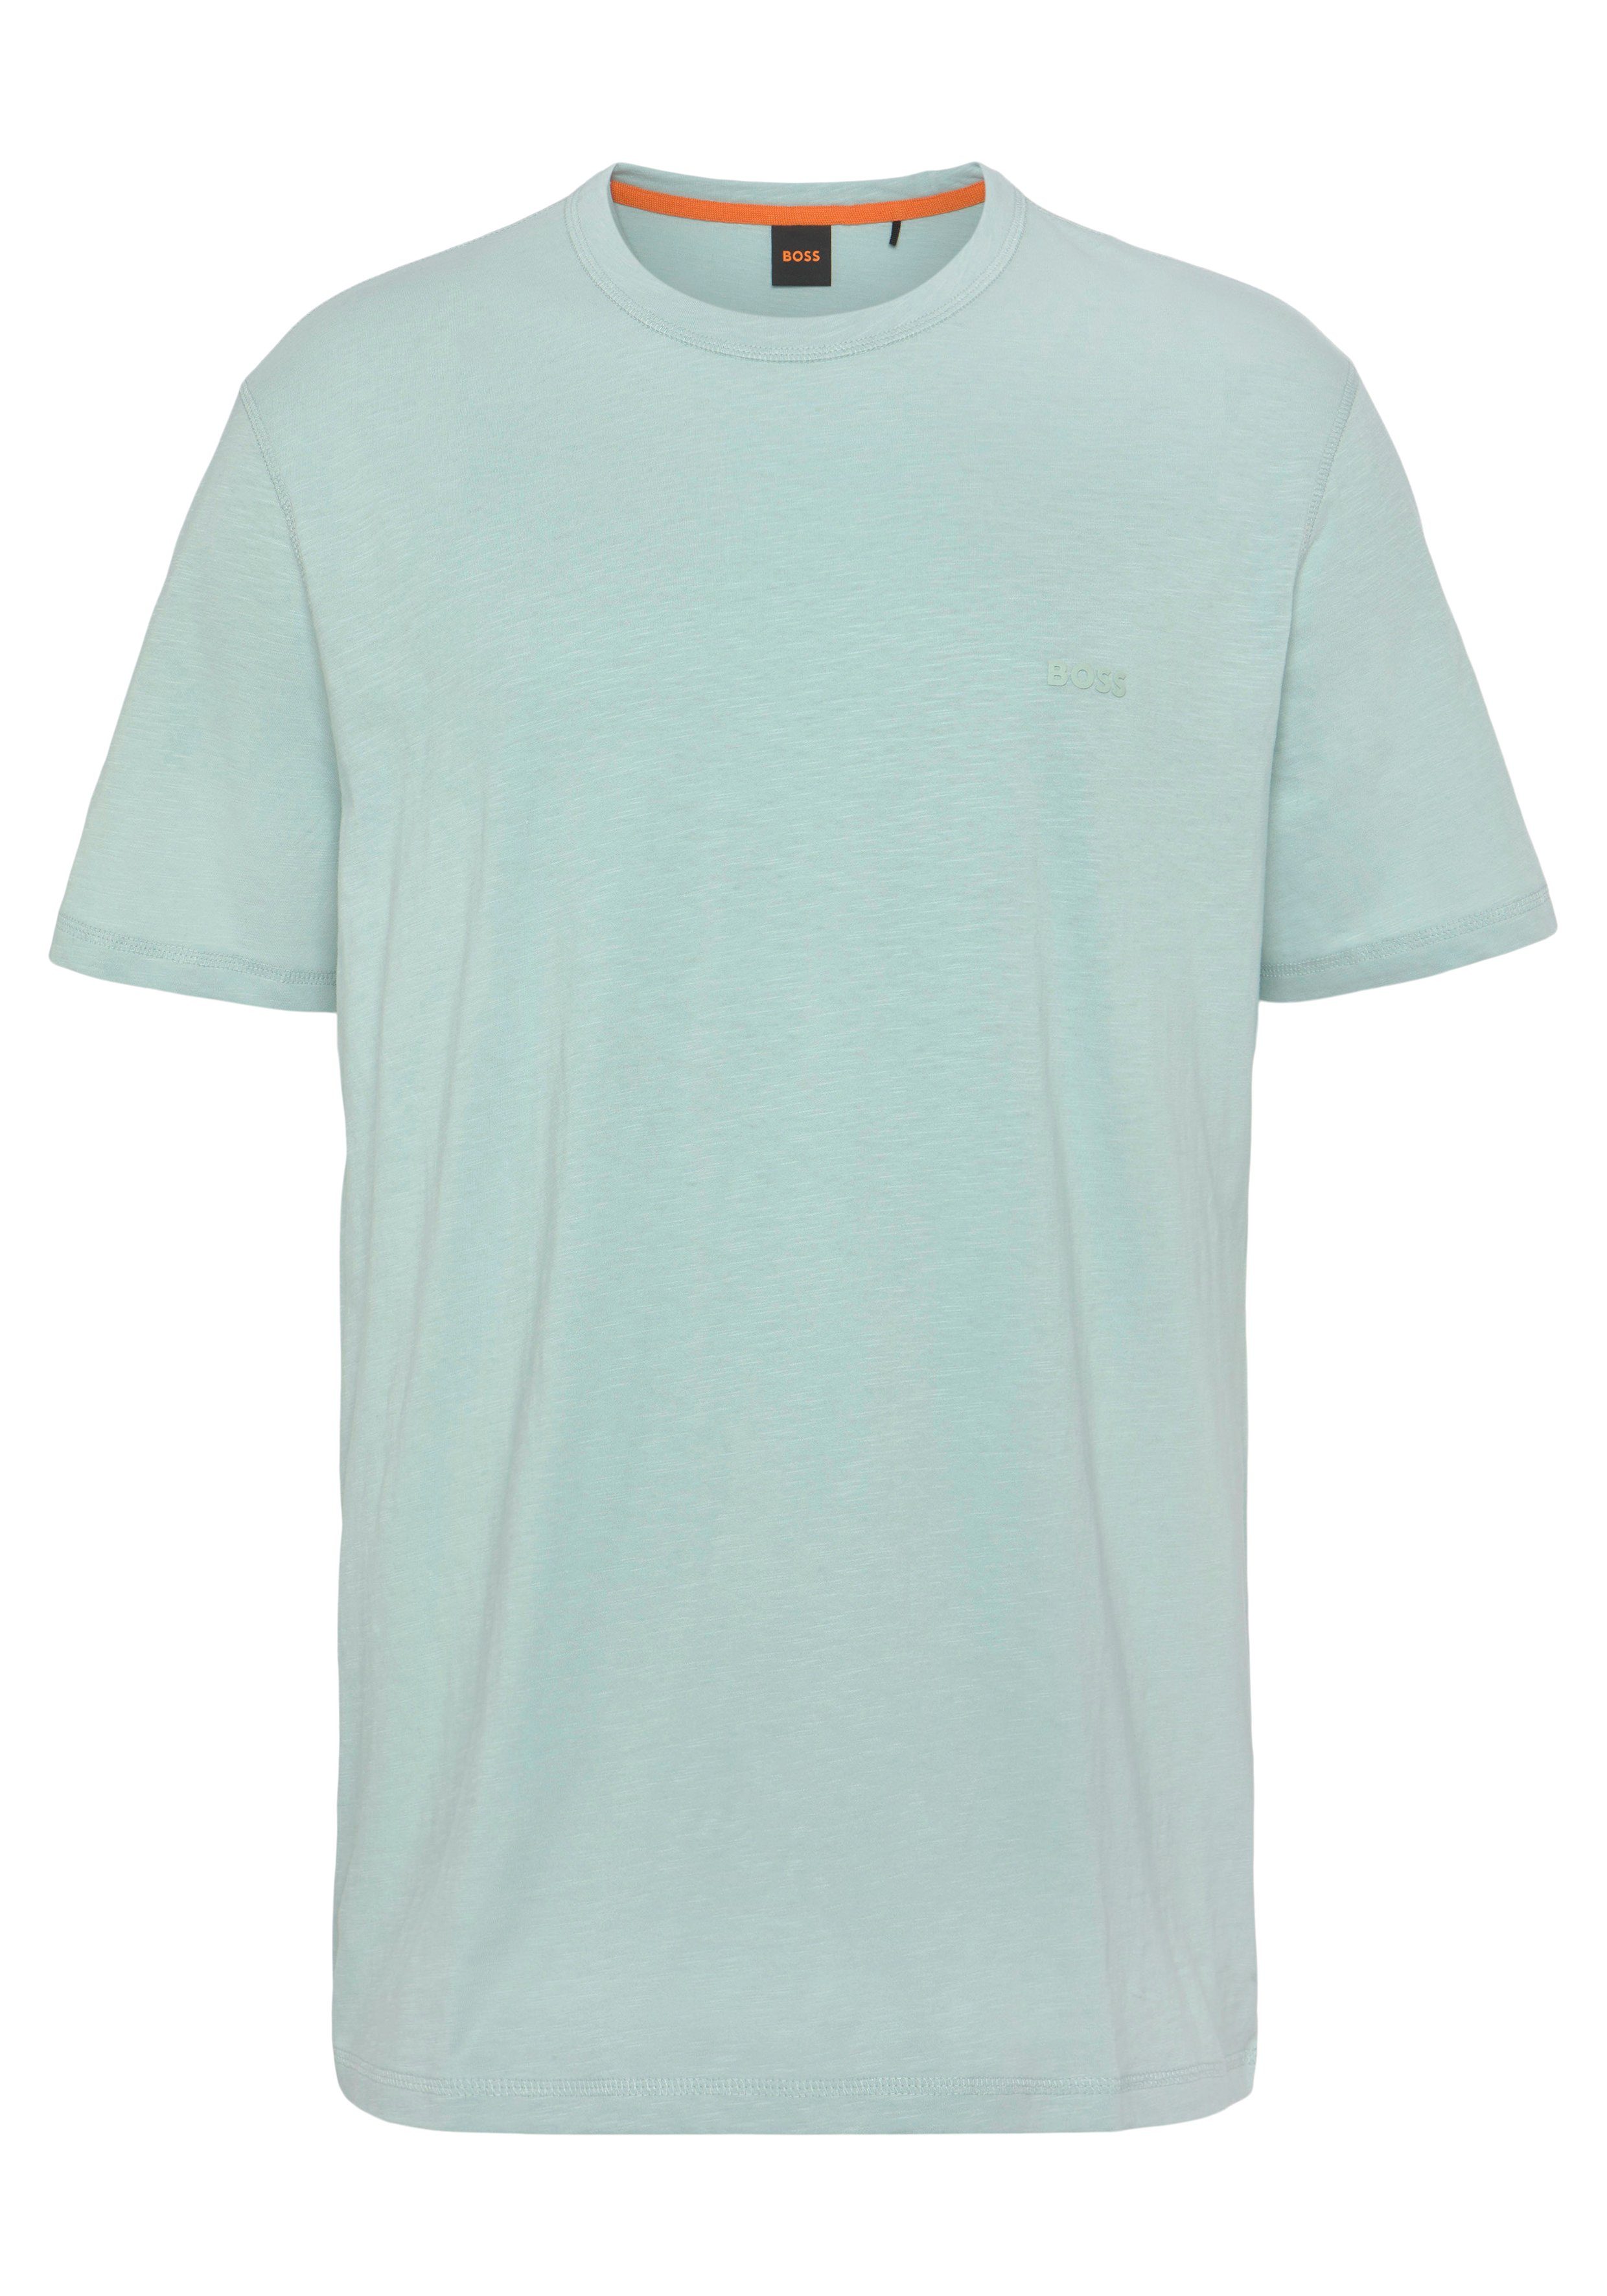 Tegood T-Shirt Turquoise/Aqua 446 ORANGE BOSS mit Rundhalsausschnitt